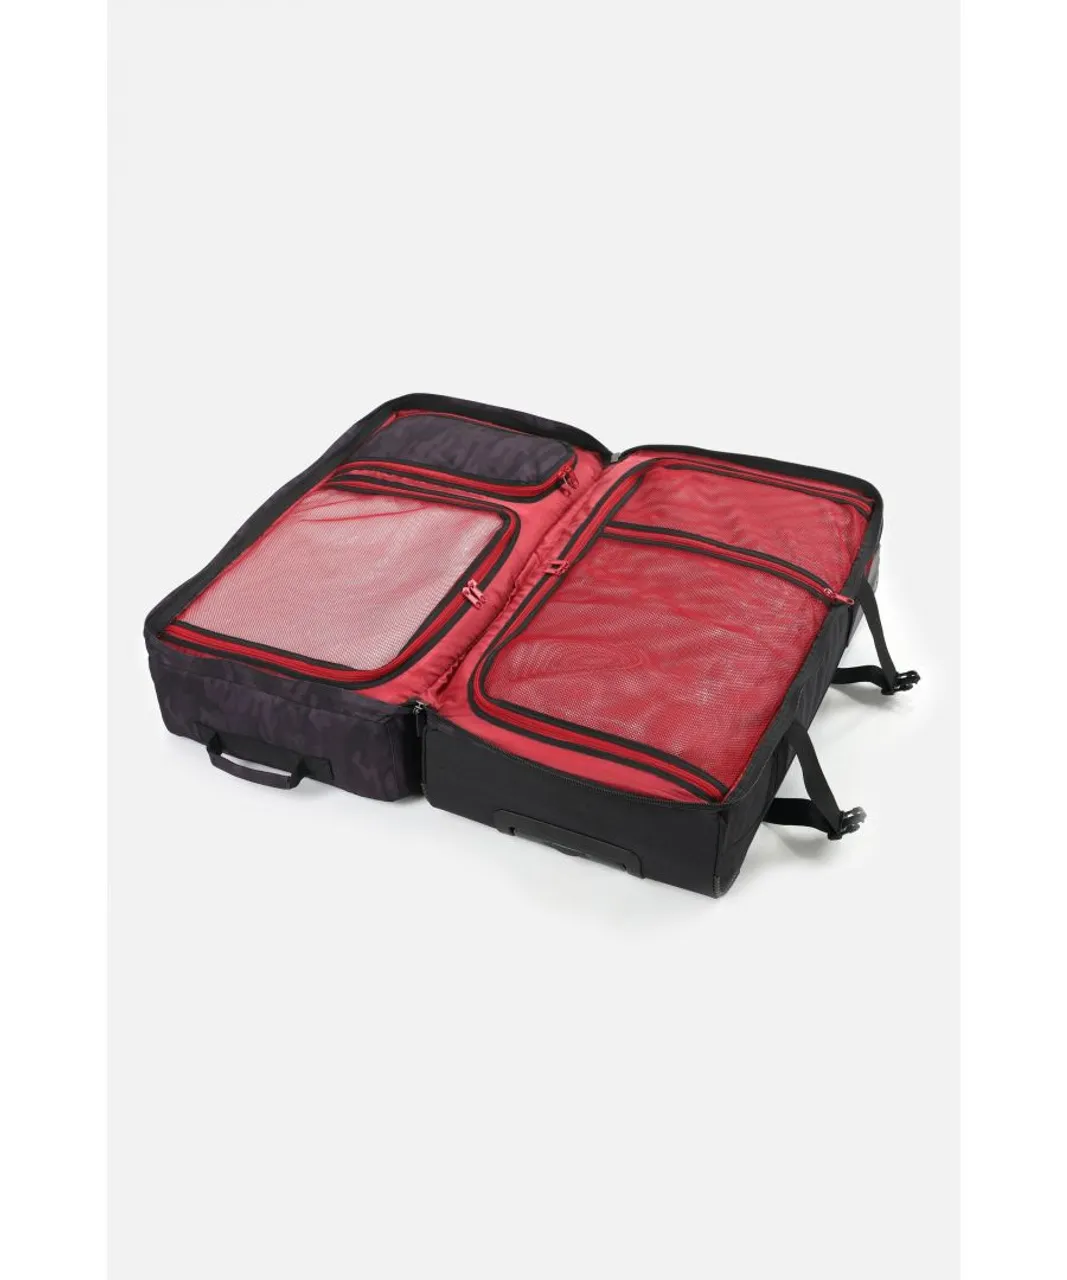 Surfanic Unisex Maxim 2.0 100L Roller Bag Black Camo - One Size